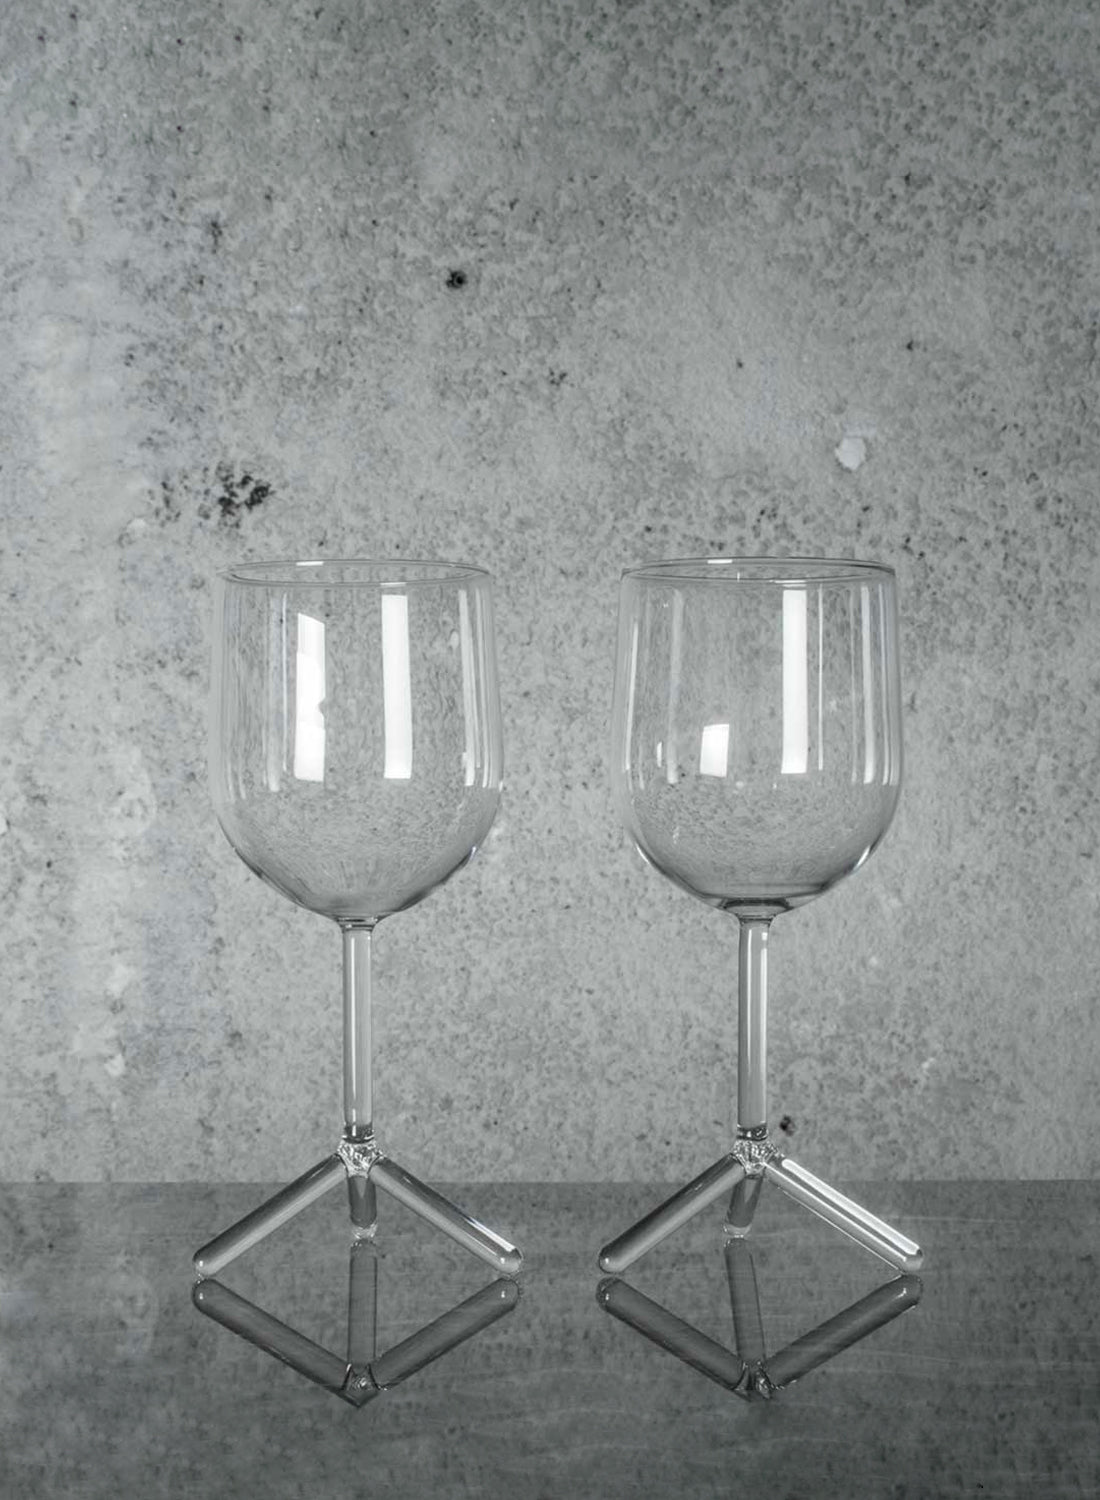 Maarten Baptist Tripod White Wine Glasses (set of 4)